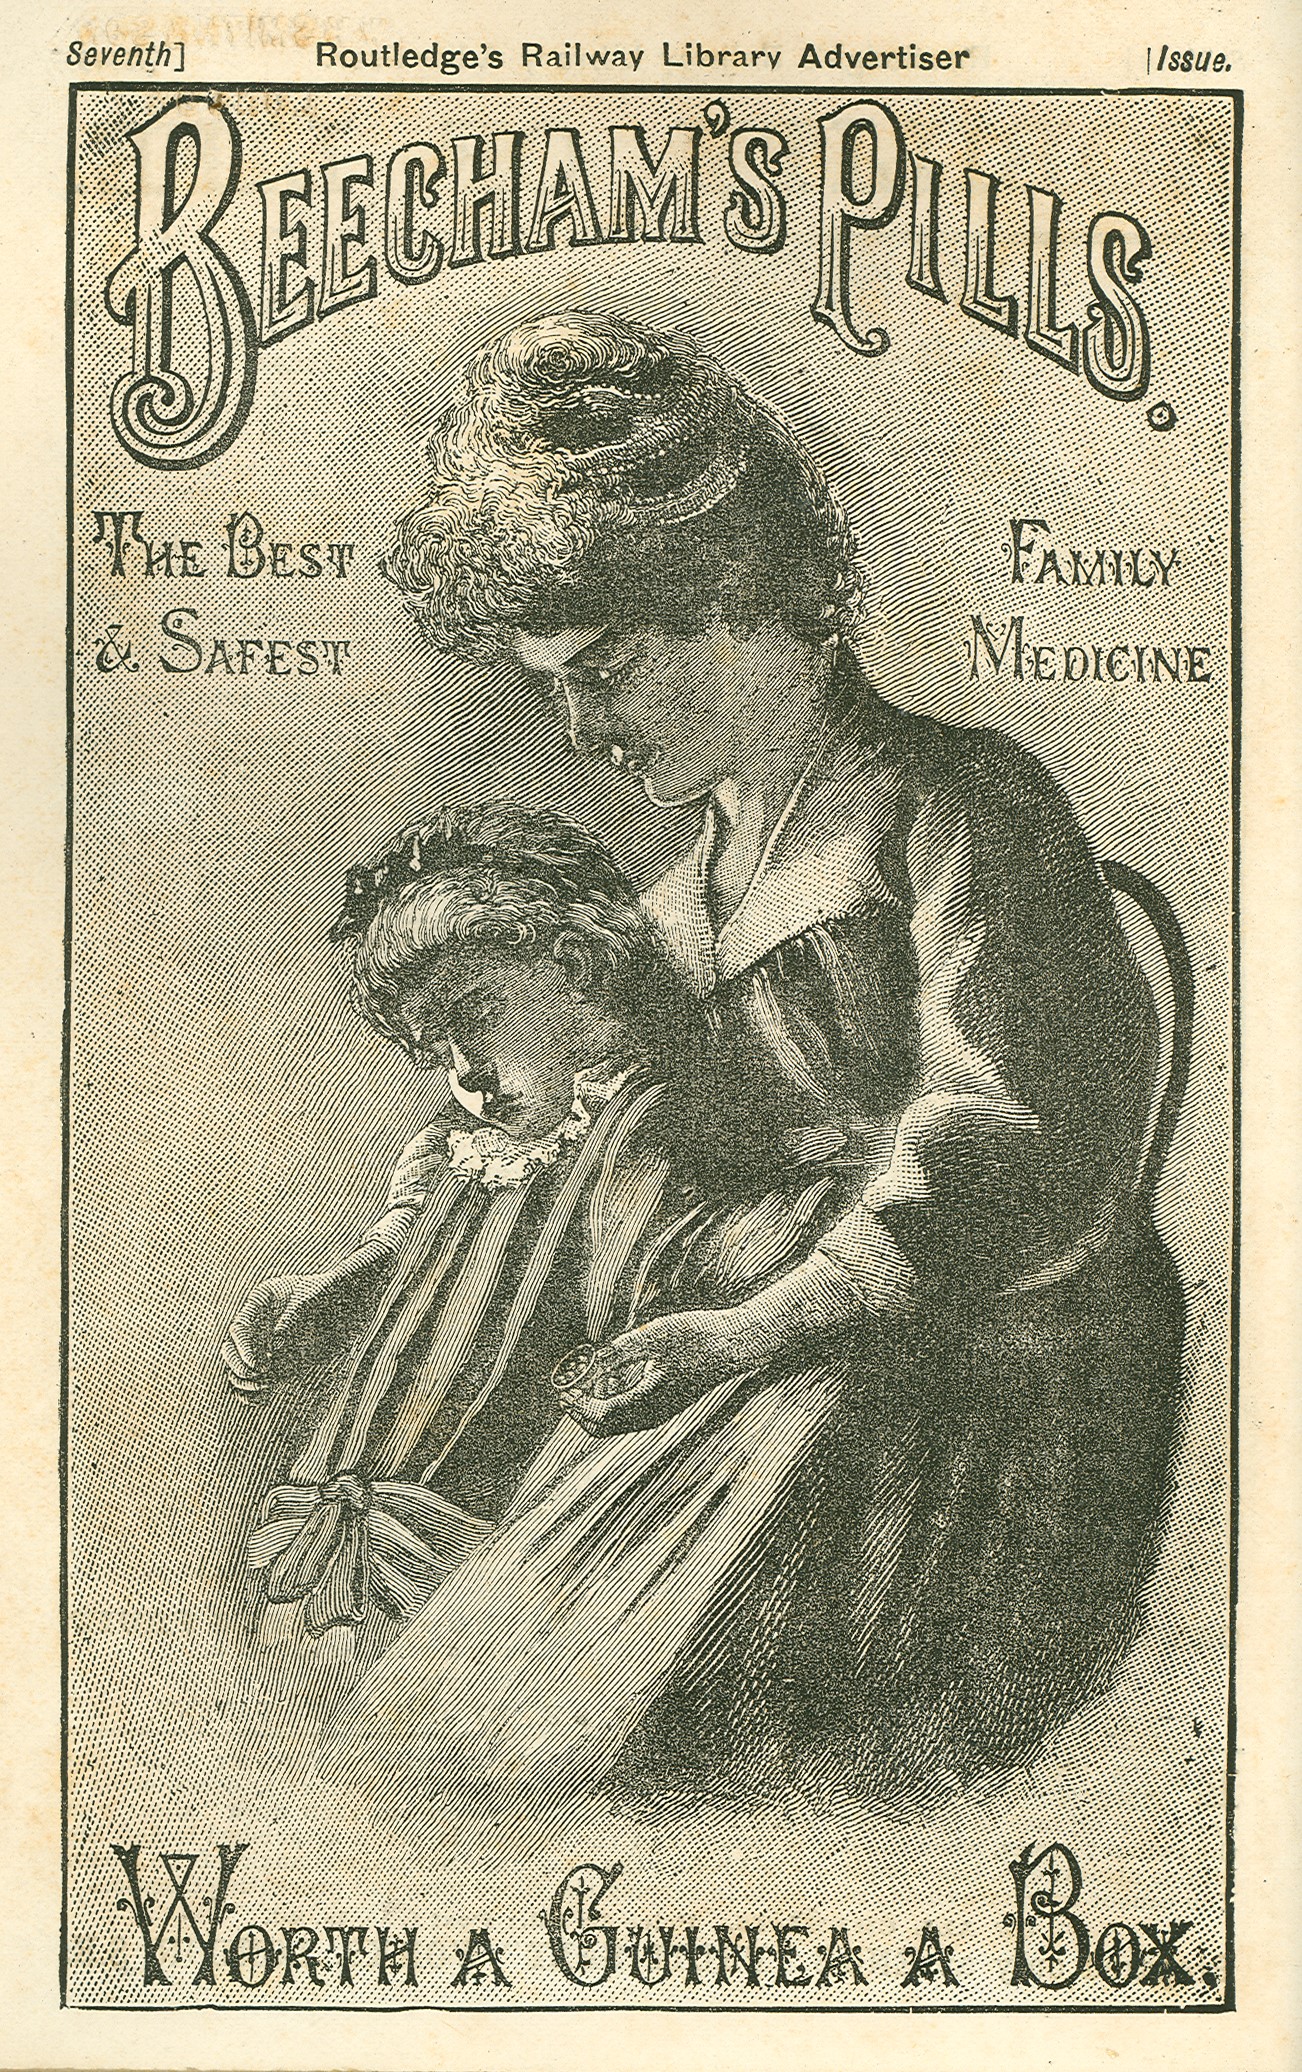 Advertisement for Beecham’s Pills, London: George Routledge 1889